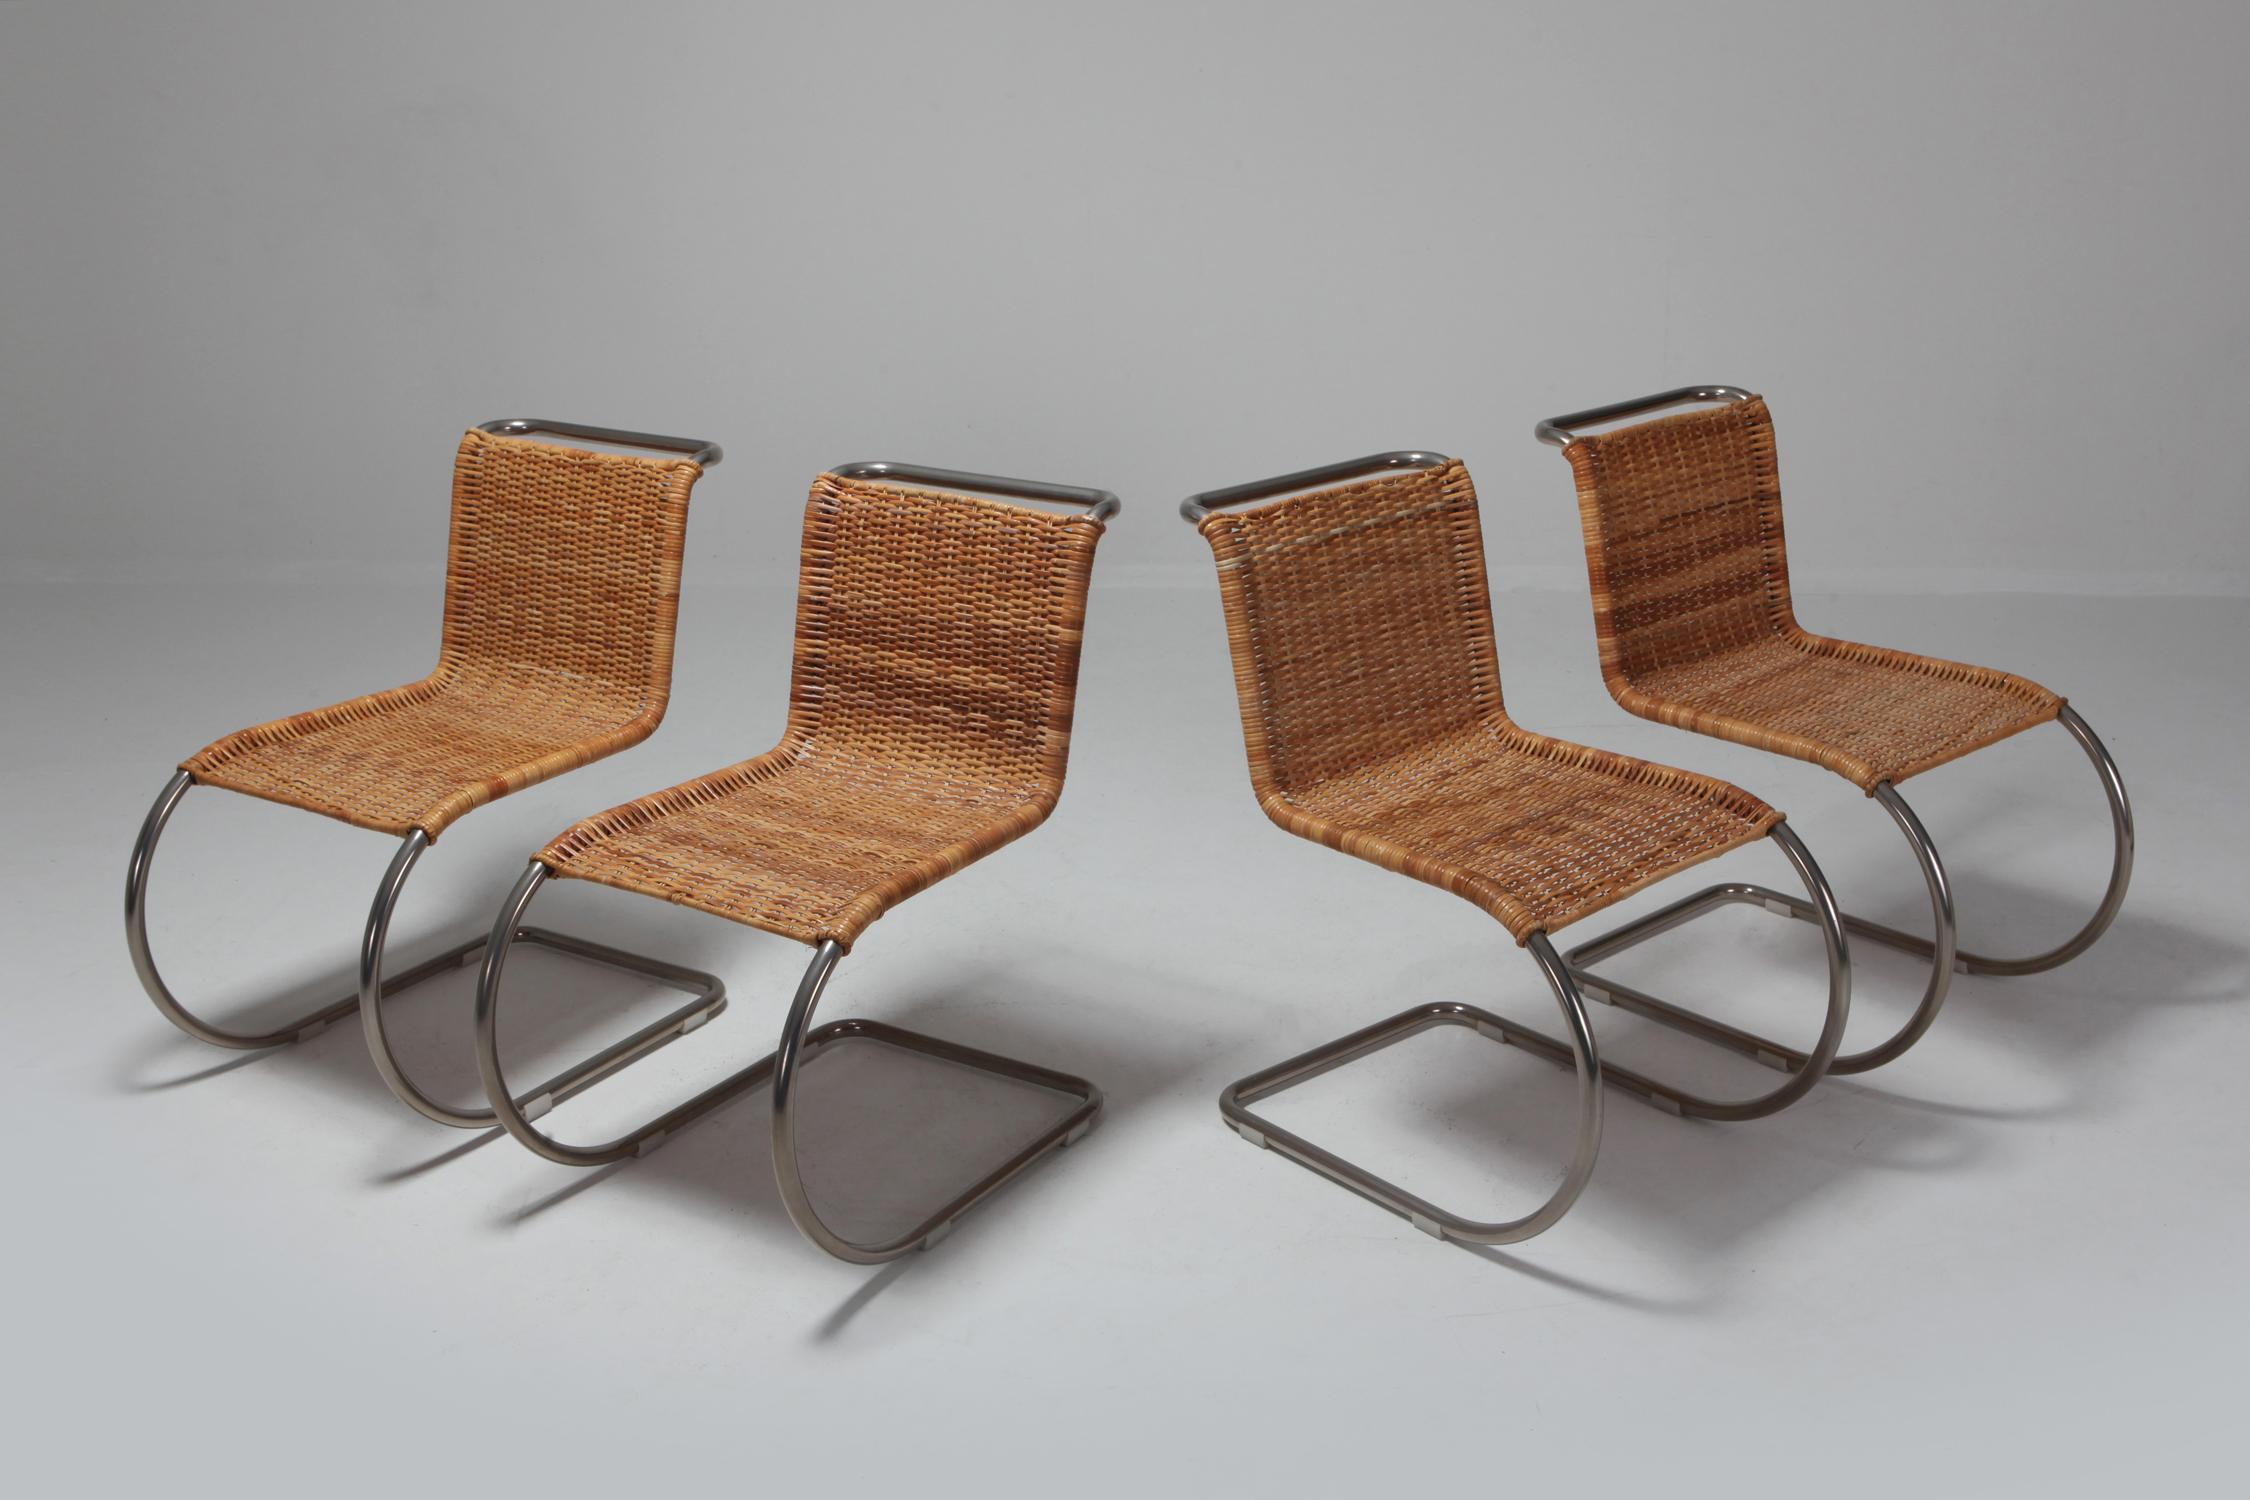 European Ludwig Mies van der Rohe Set of Four B42 Weissenhof Chairs by Tecta